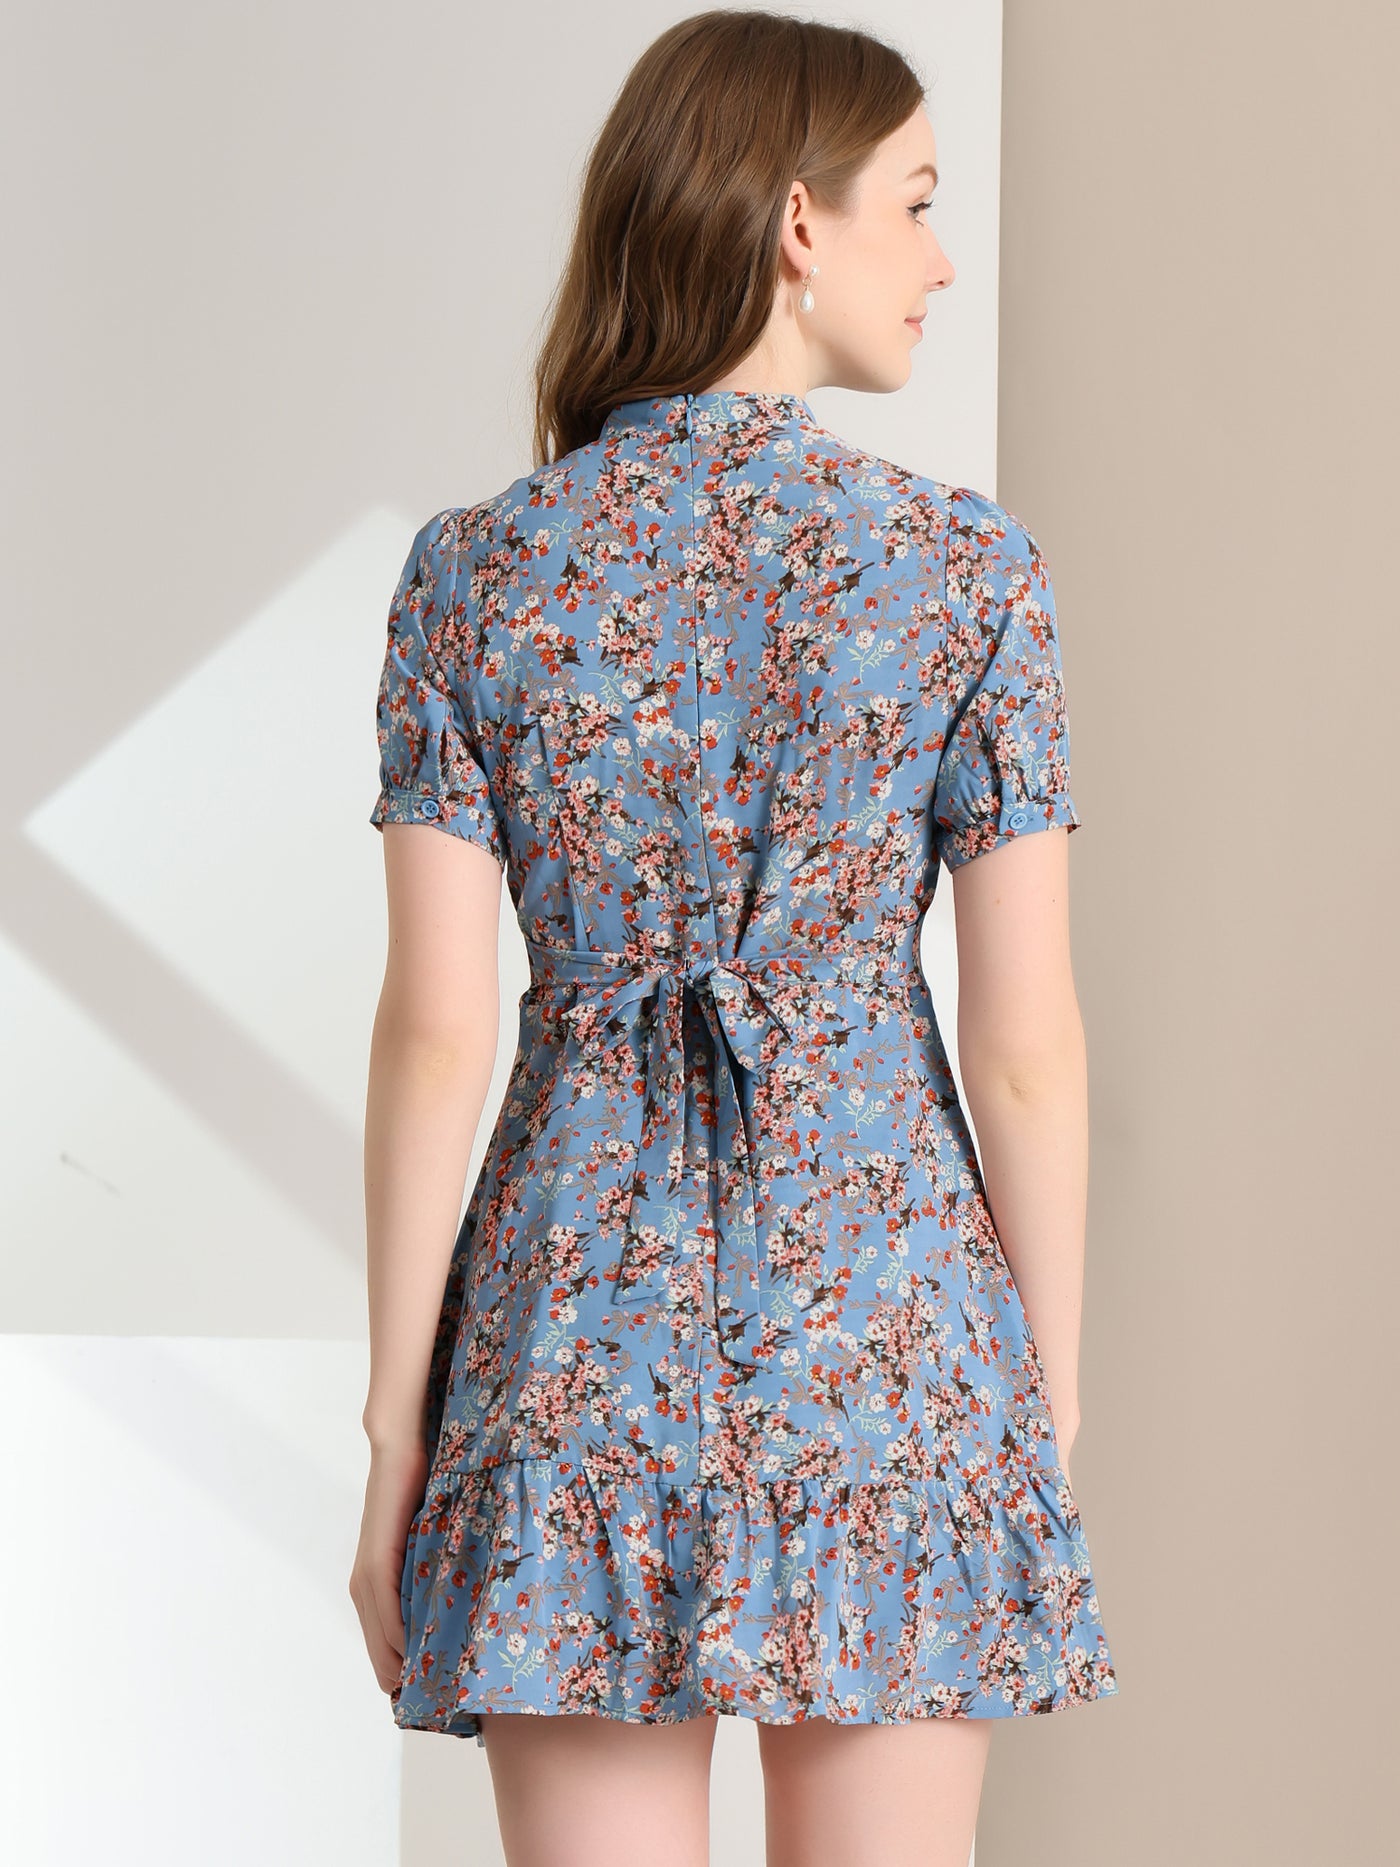 Allegra K Floral Printed Short Sleeve Self Tie Summer Mini Dress